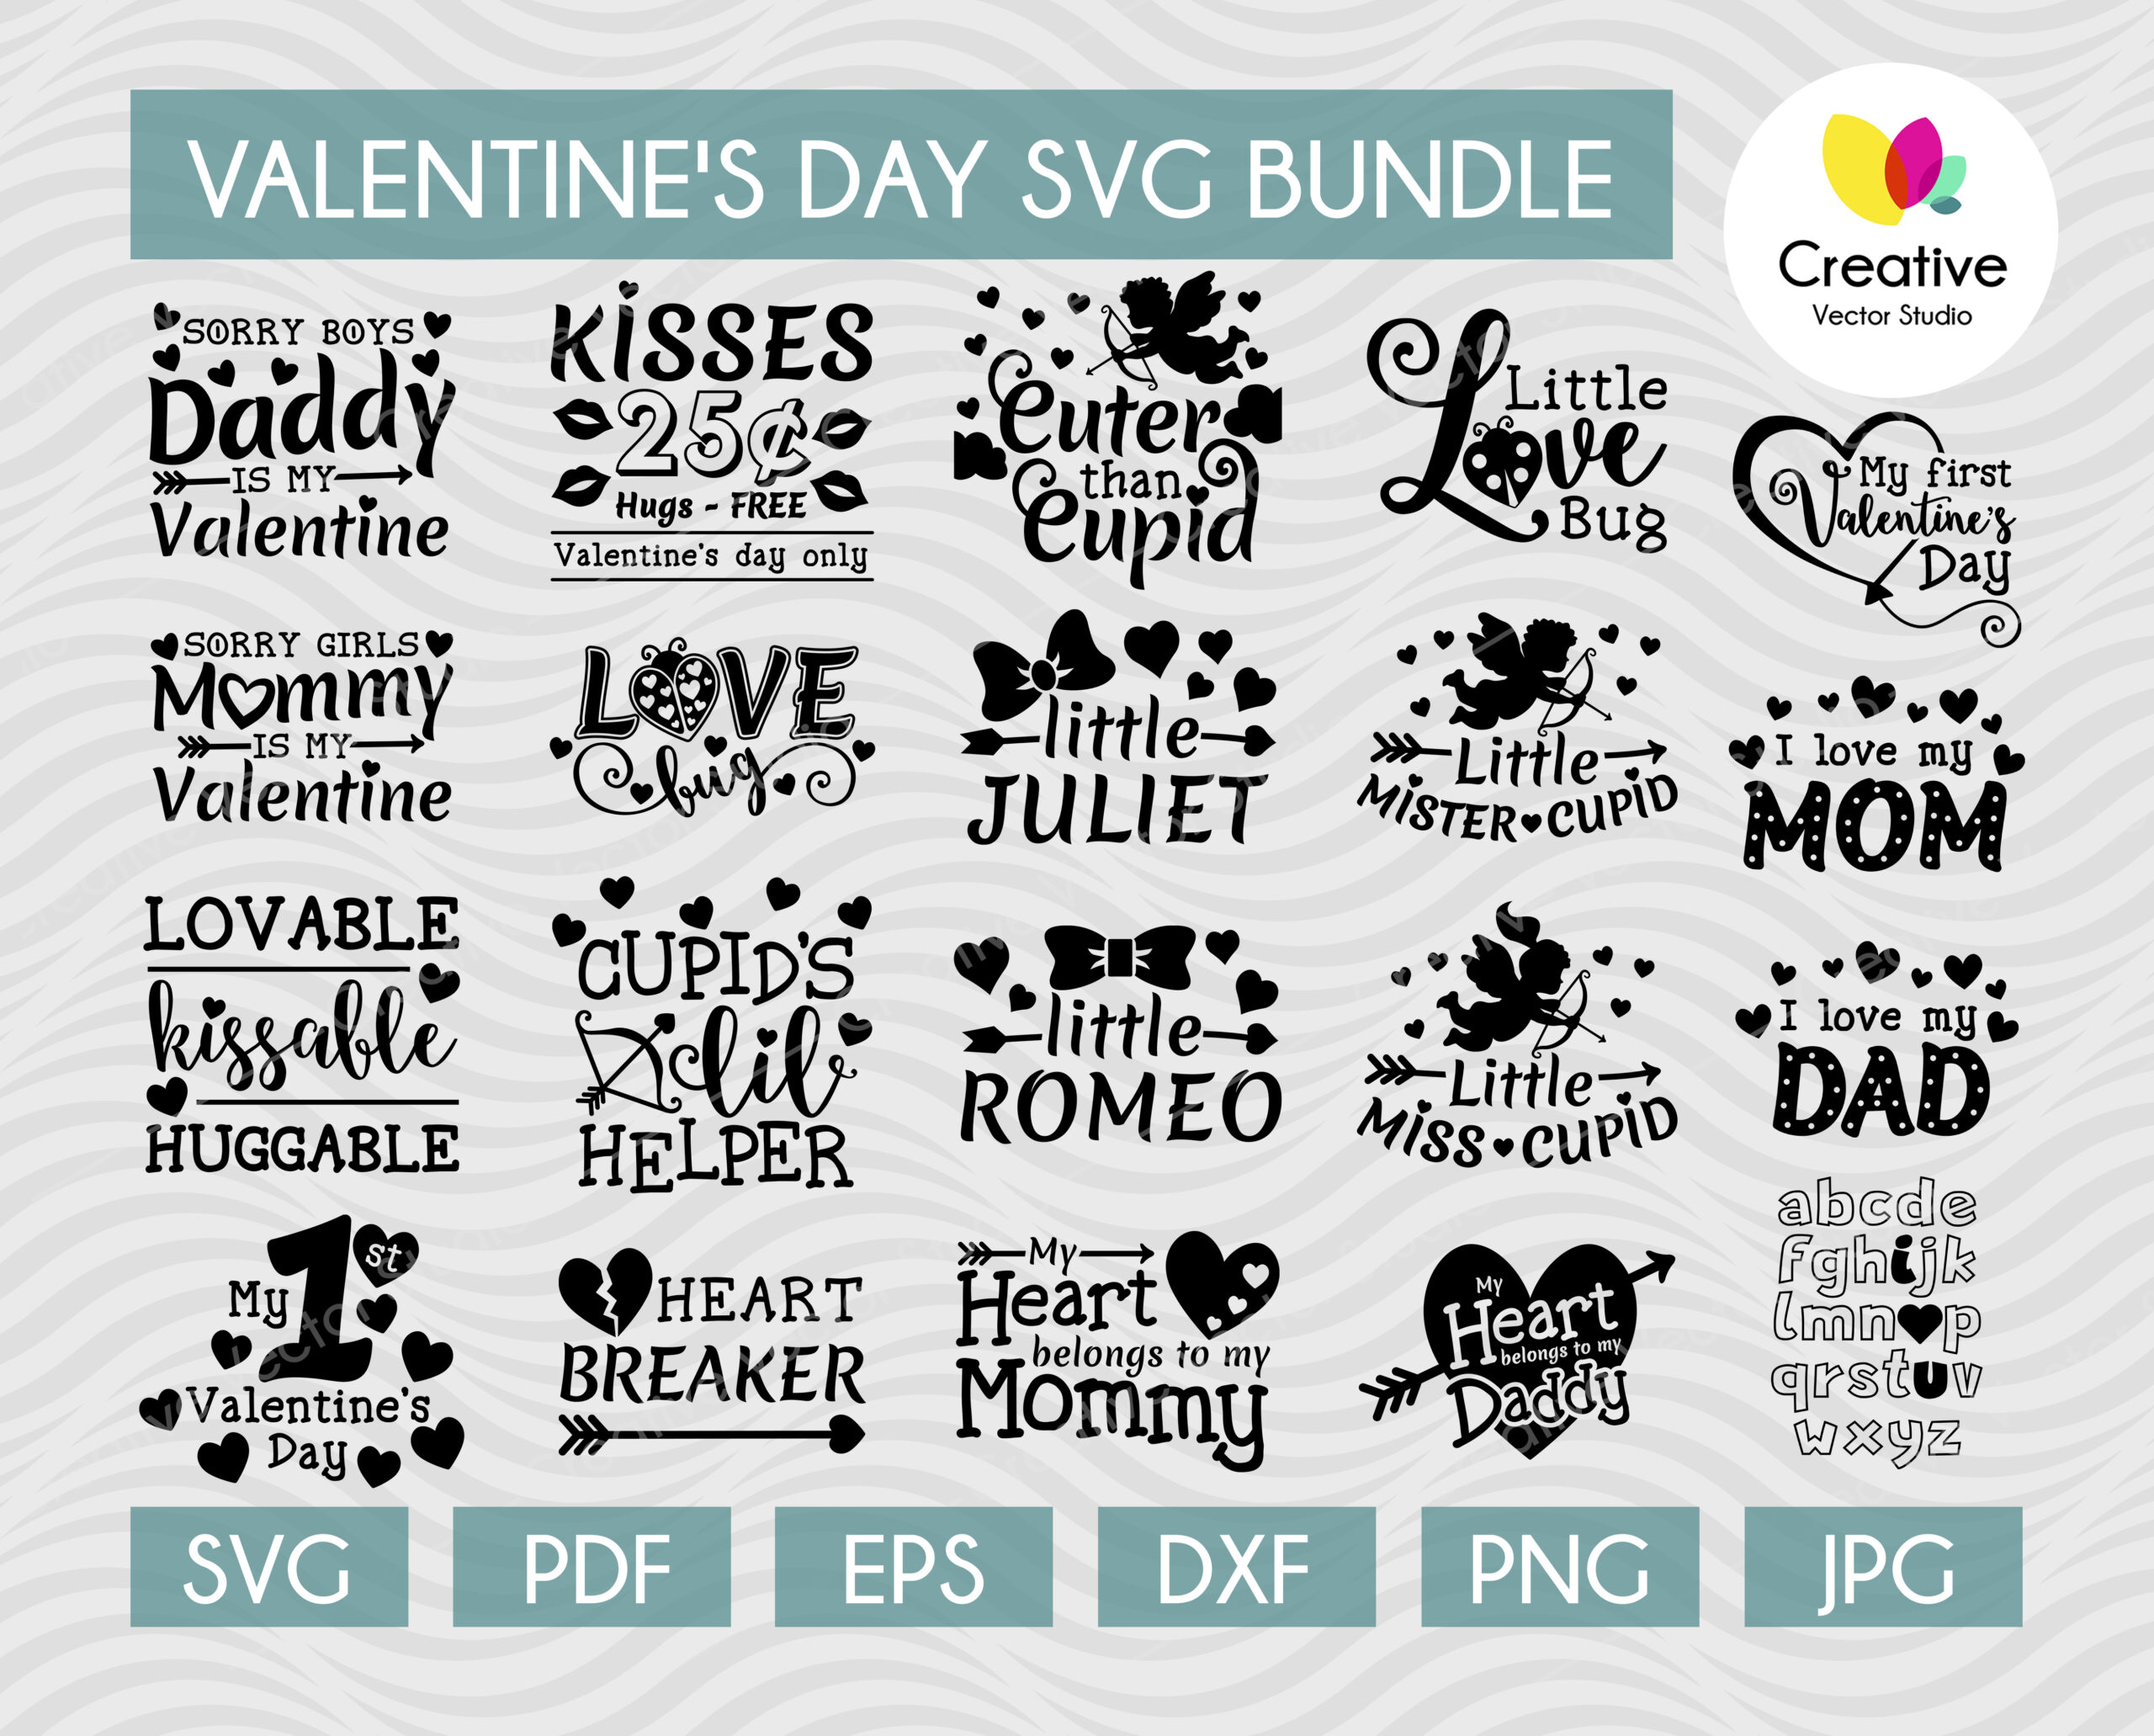 Kids Valentine's SVG Bundle #2 - Creative Vector Studio